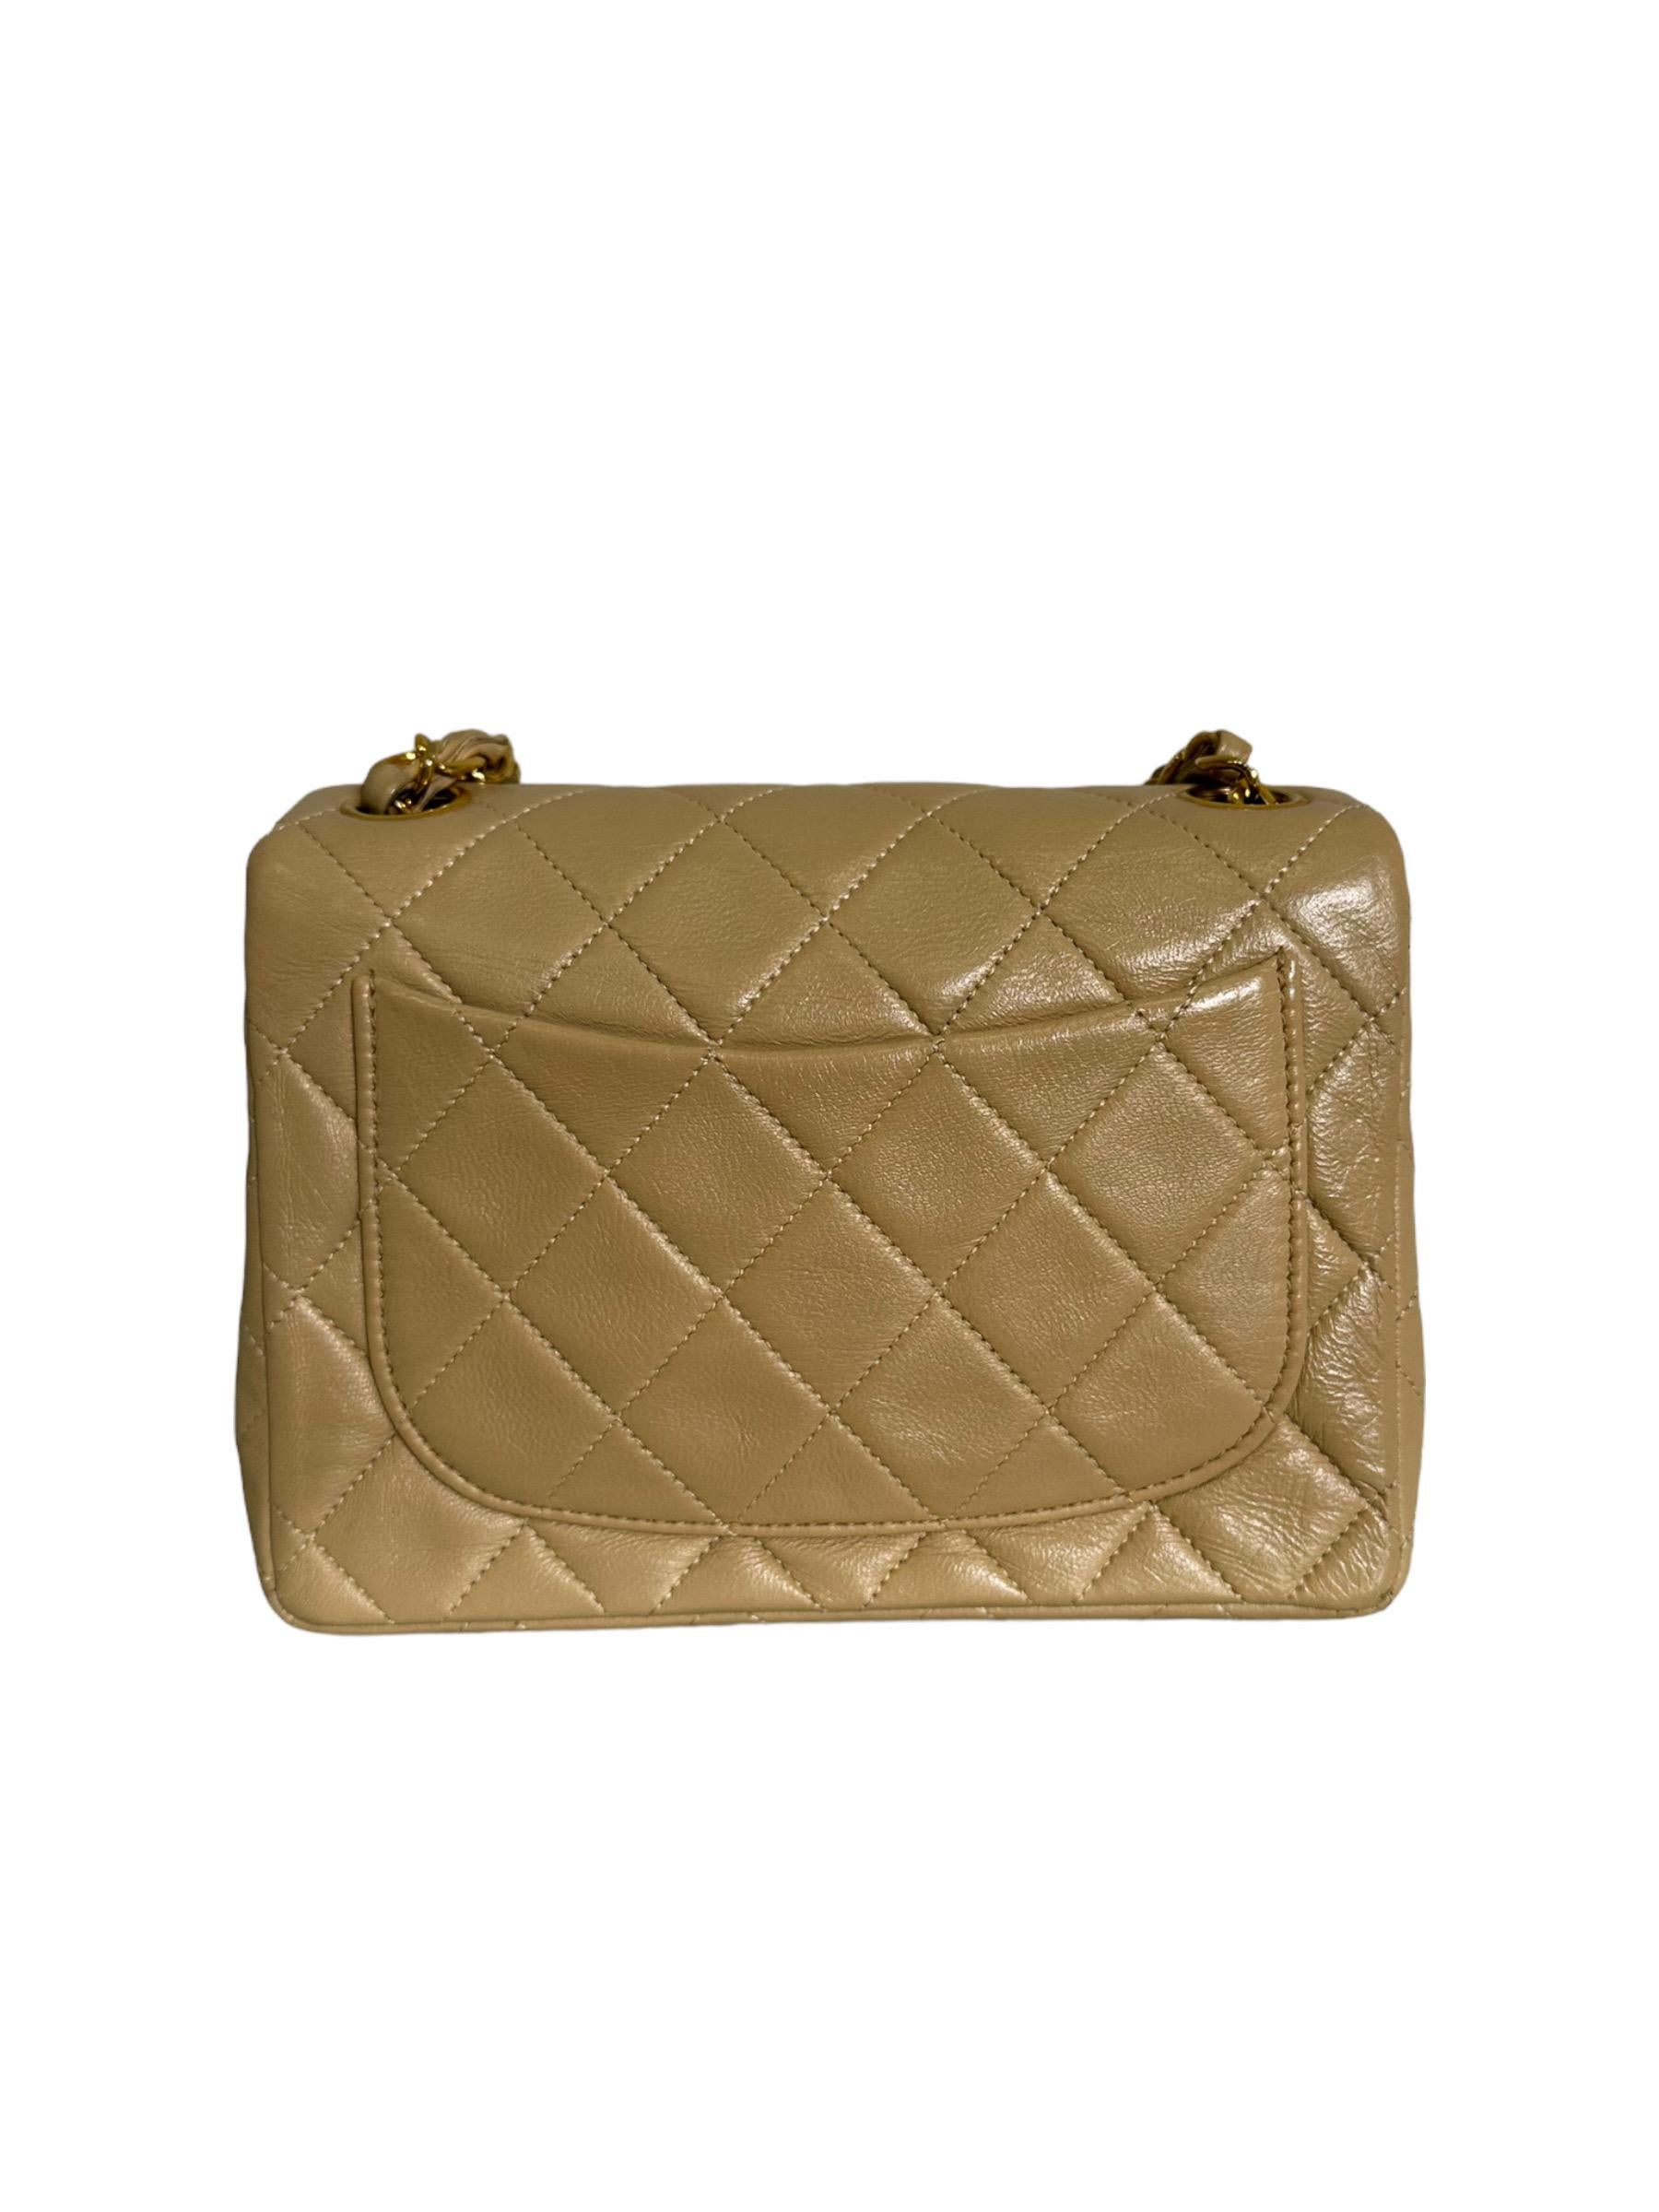 1990s Chanel Mini Flap Beige Leather Shoulder Bag For Sale 2